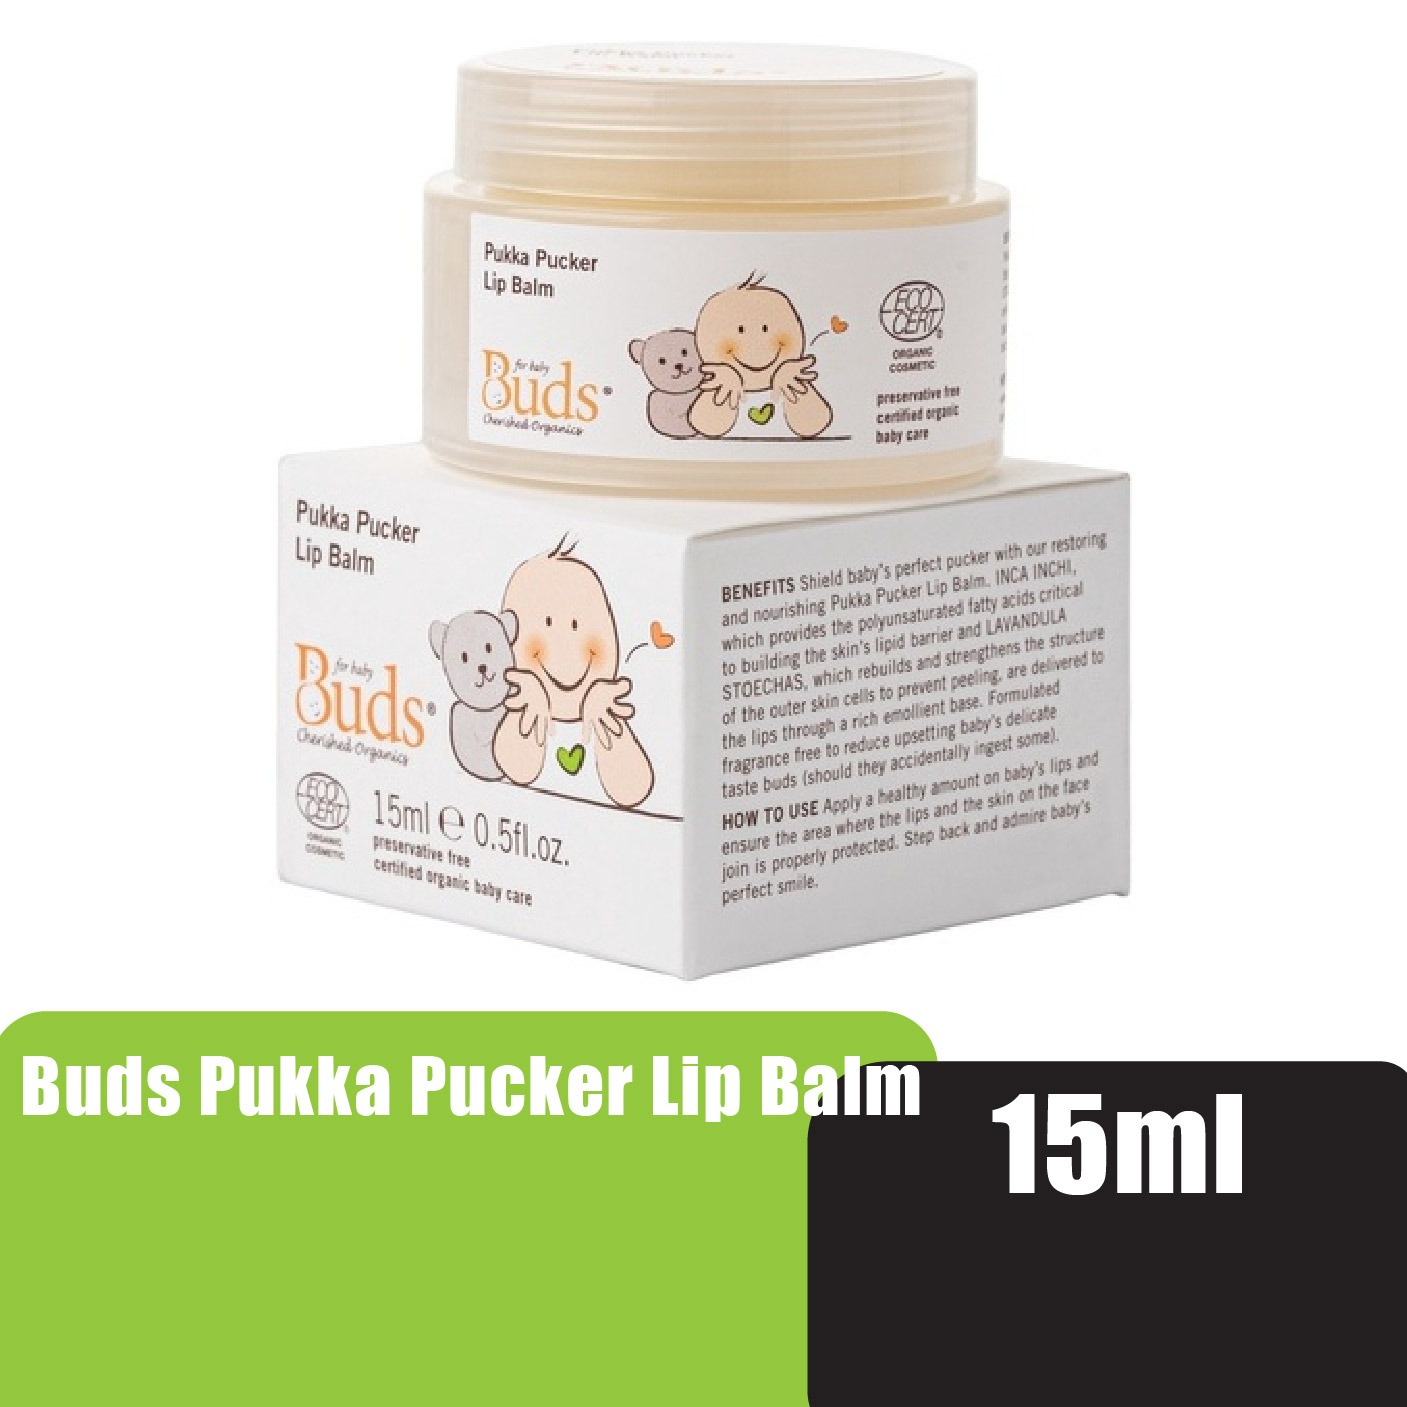 Buds Pukka Pucker Fragrance free Lip Balm 15ml - For skin barrier repair (Suitable for eczema & sensitive skin)